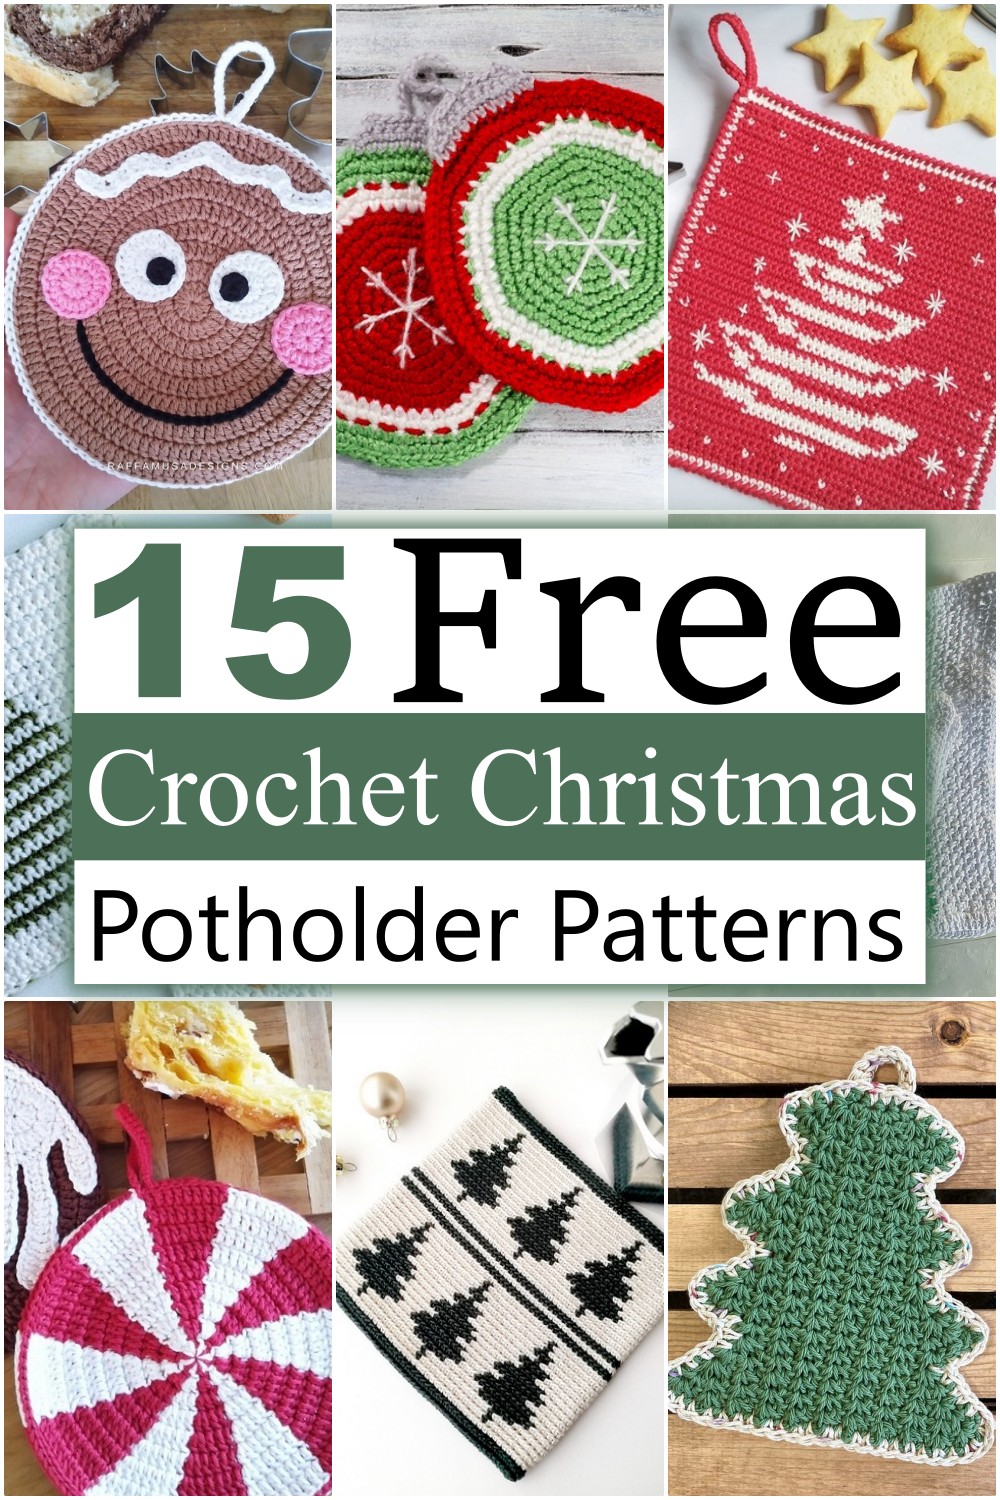 Crochet Christmas Potholder Patterns